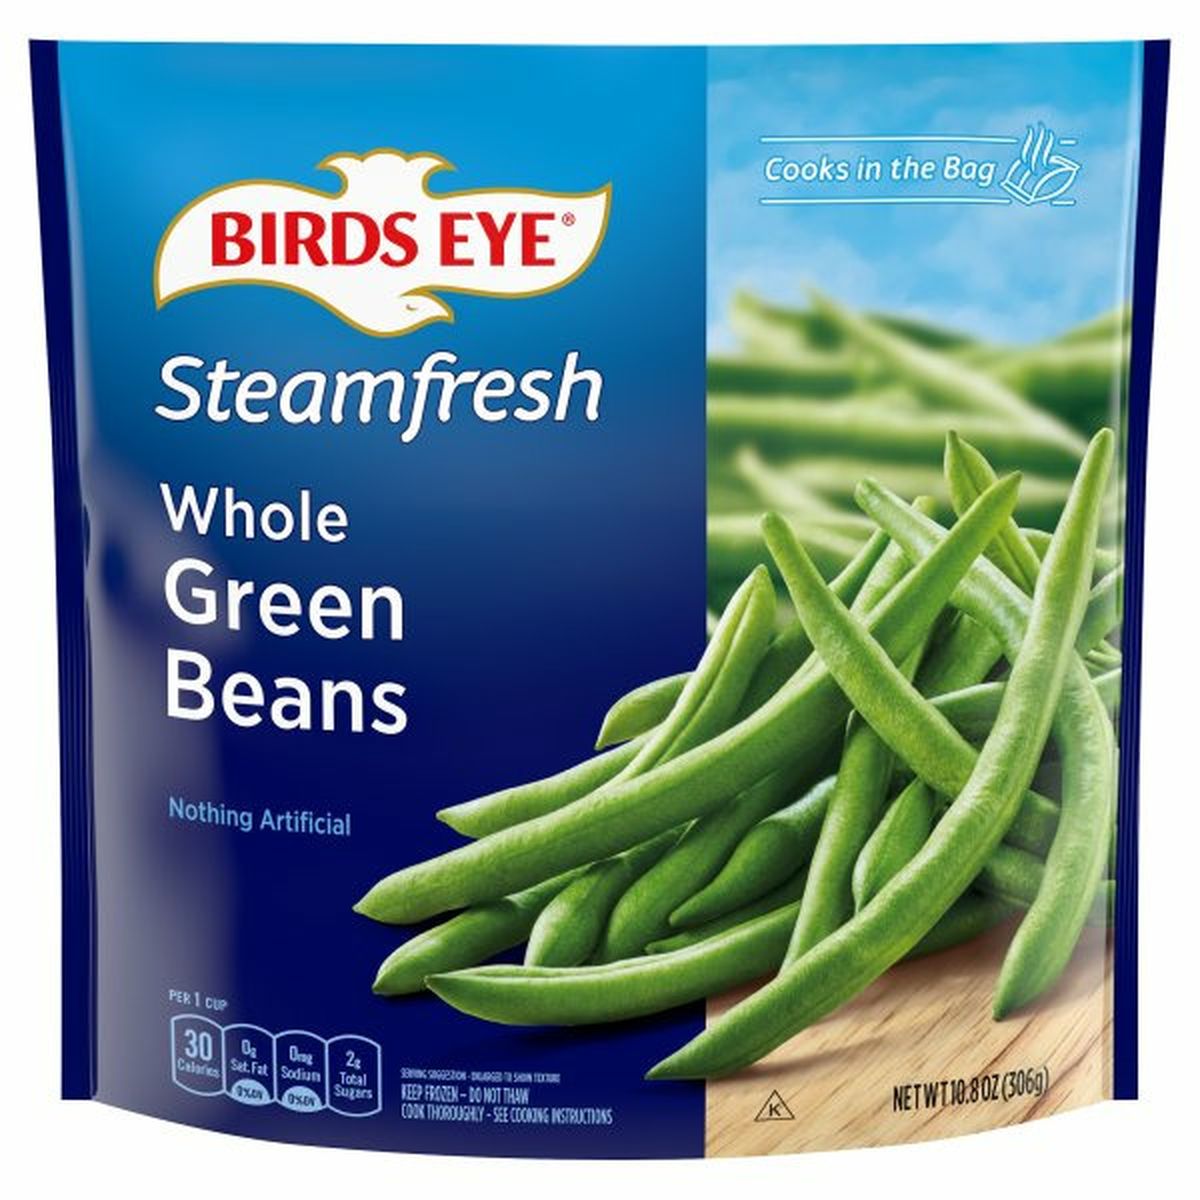 Calories in Birds Eye Steamfresh Green Beans, Whole